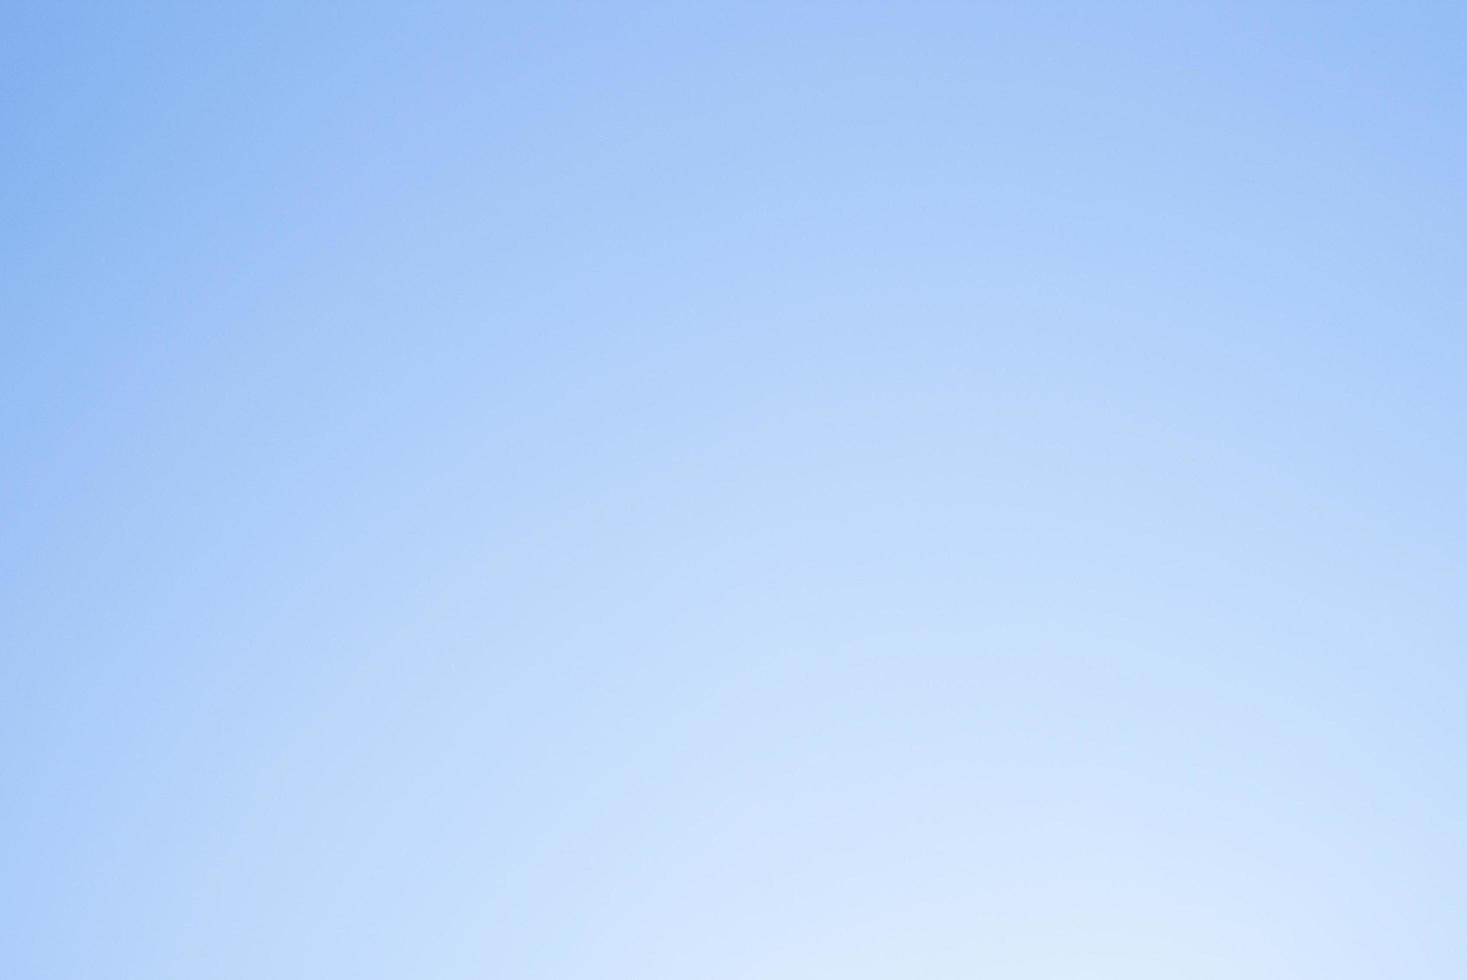 gradiente de fondo de cielo azul claro. concepto de fondo de pantalla y  telón de fondo 4816185 Foto de stock en Vecteezy